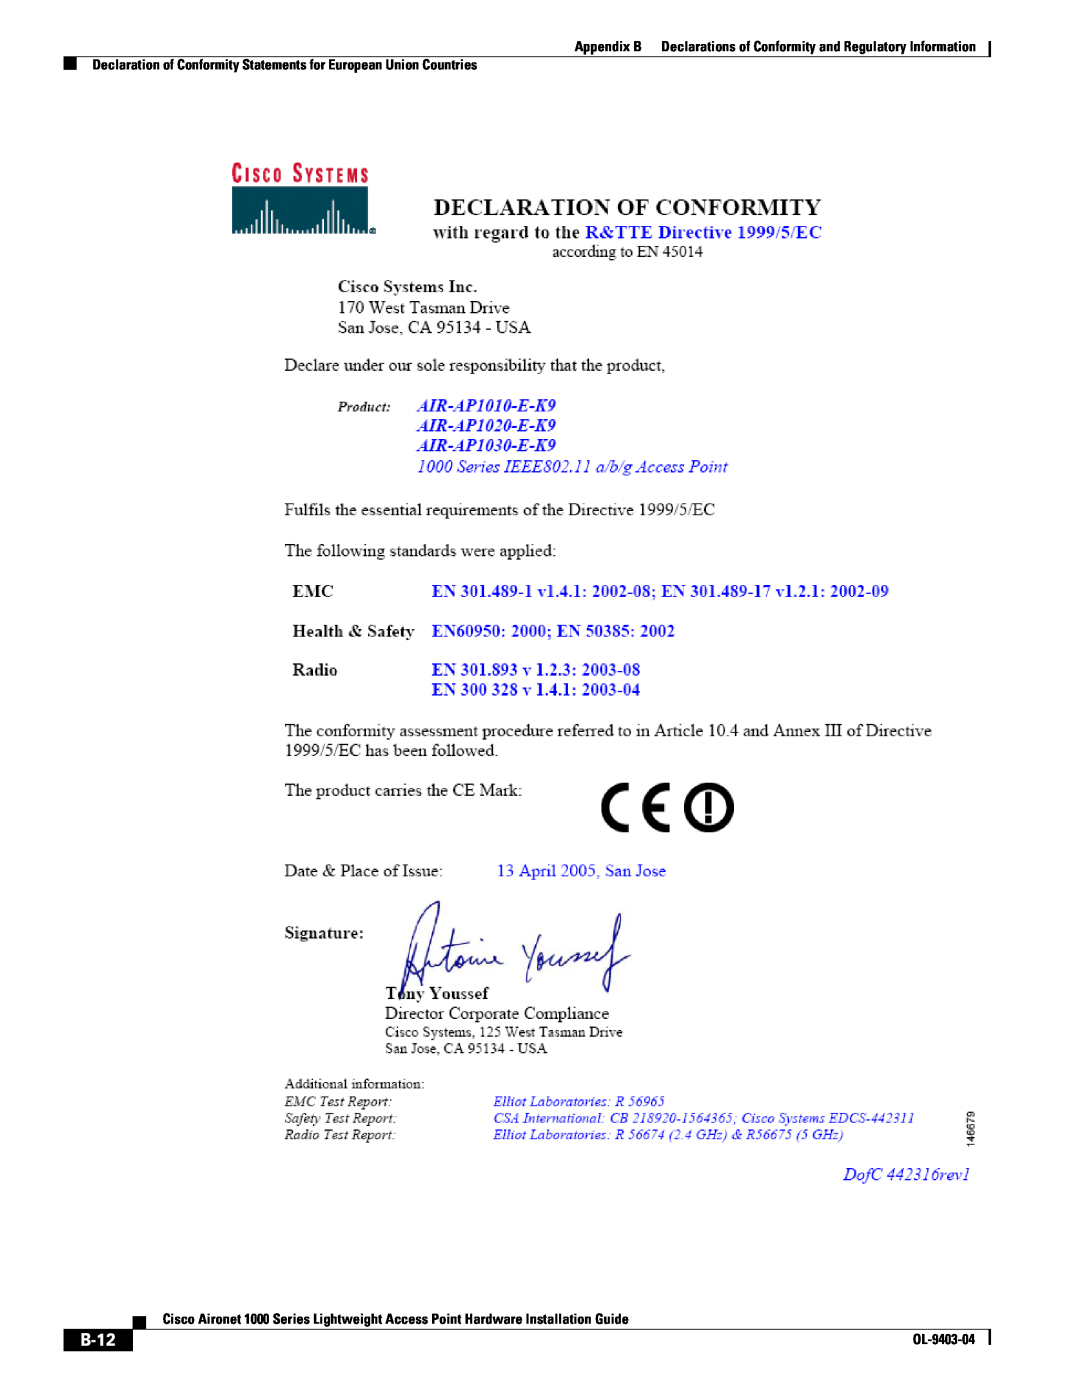 Cisco Systems 2000 appendix B-12, Appendix B Declarations of Conformity and Regulatory Information, OL-9403-04 